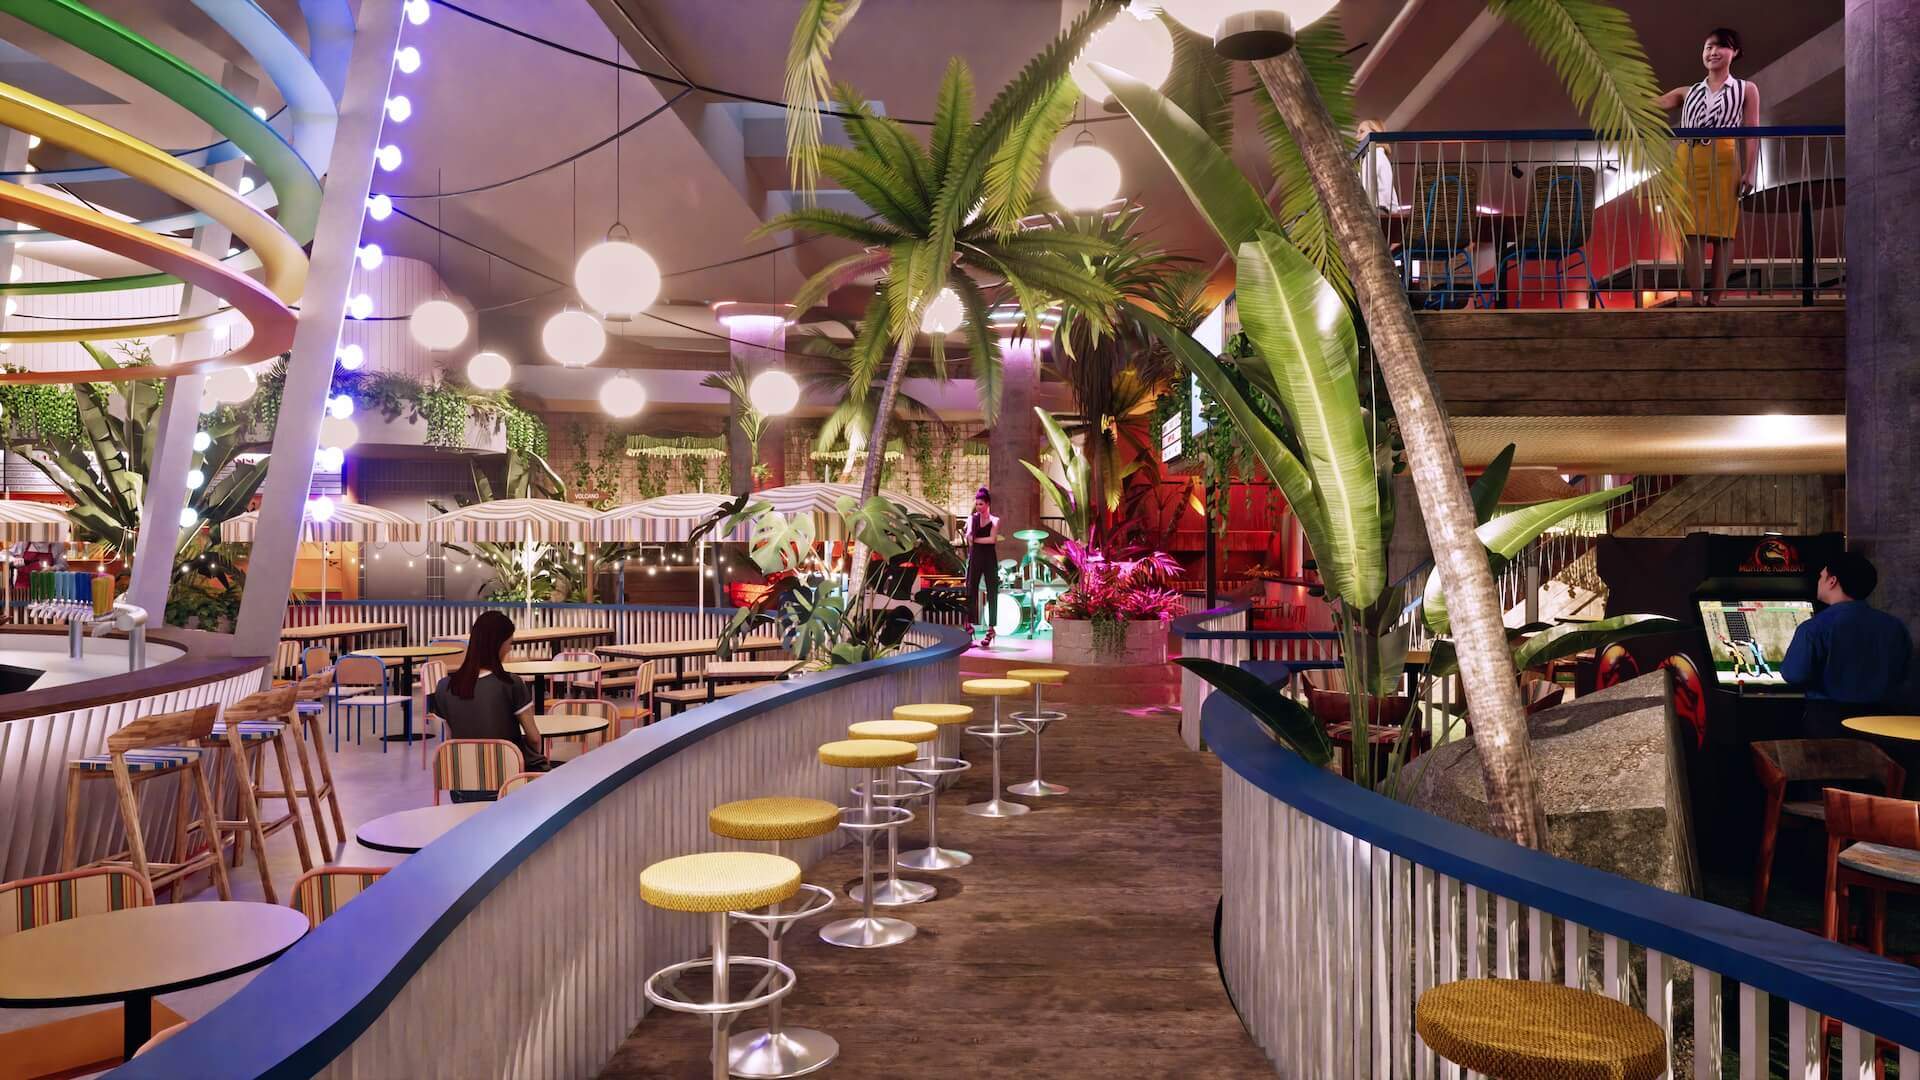 Coming Soon: Moon Dog's Massive Docklands Bar Doglands Will Have a Volcano, Palm Trees and Hidden Karaoke Room